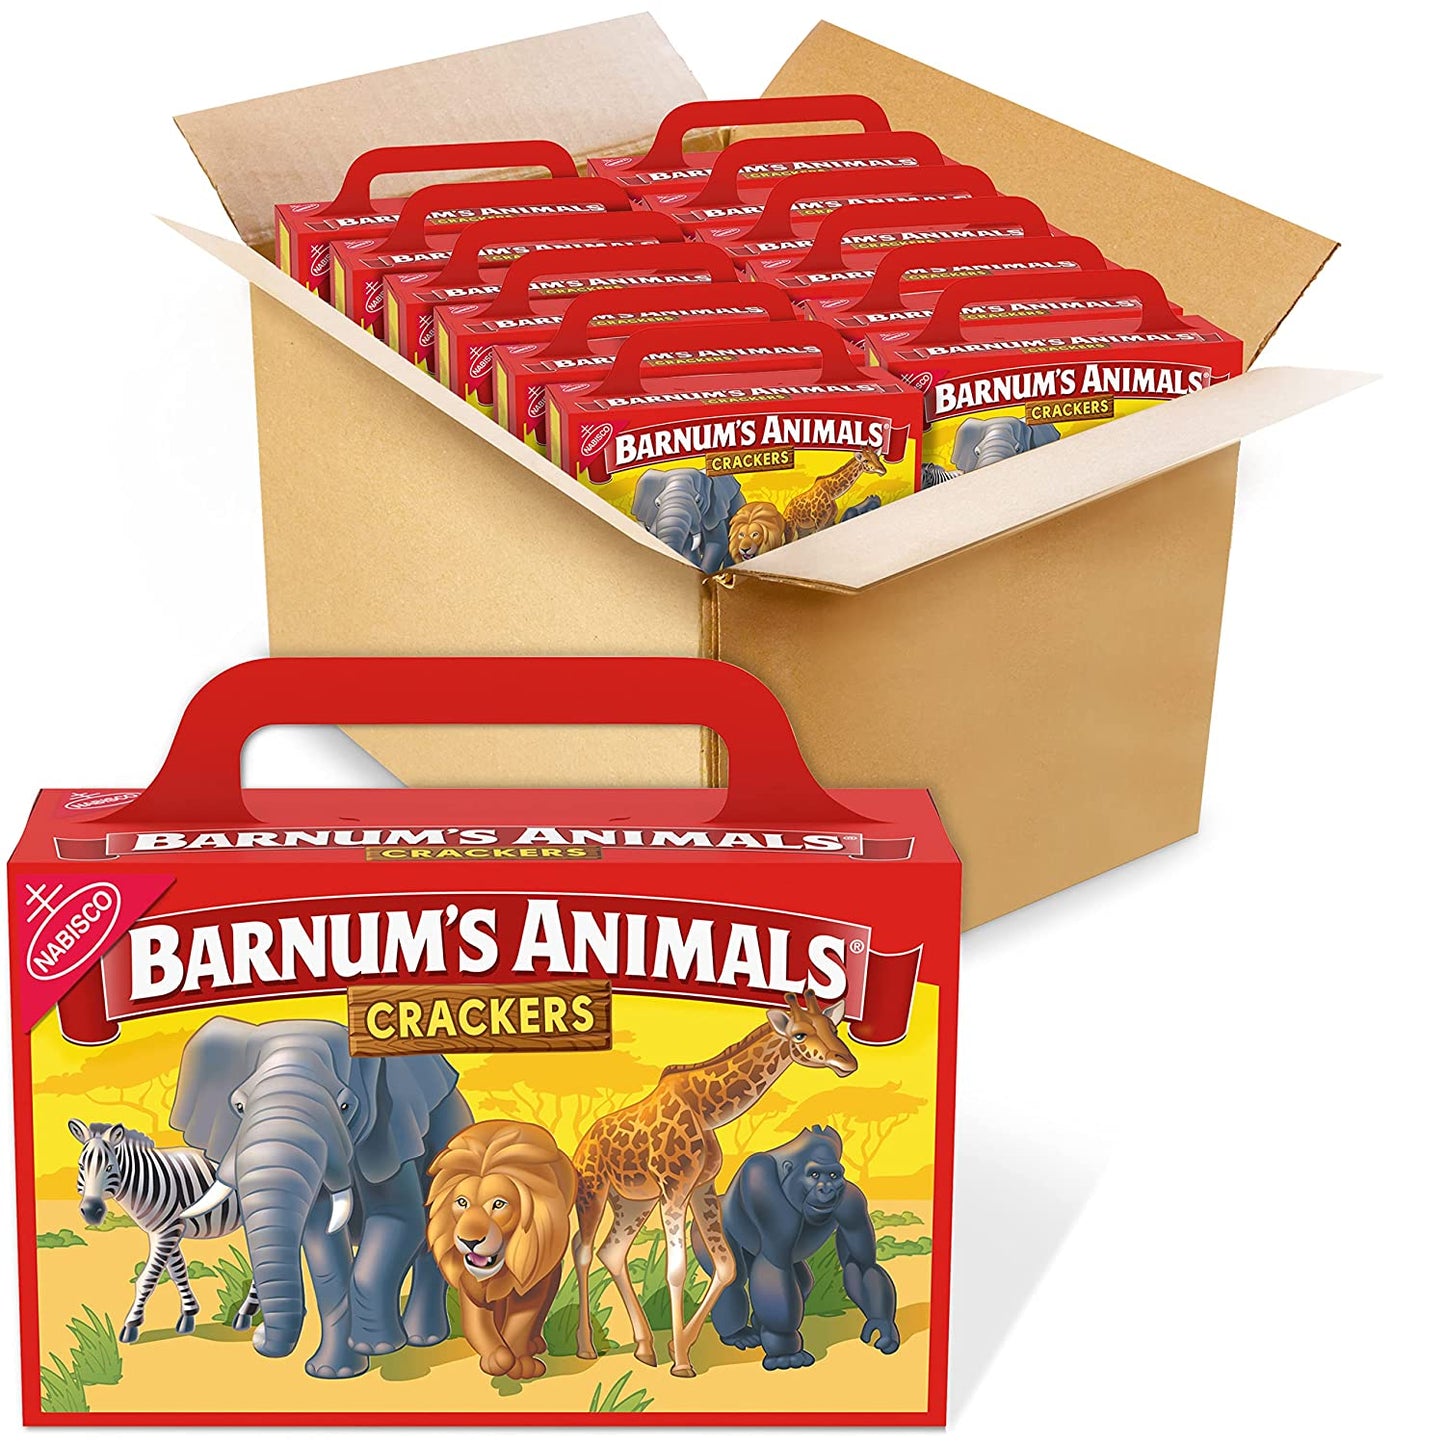 Barnum's Original Animal Crackers, School Lunch Box Snacks, 12 Snack Boxes